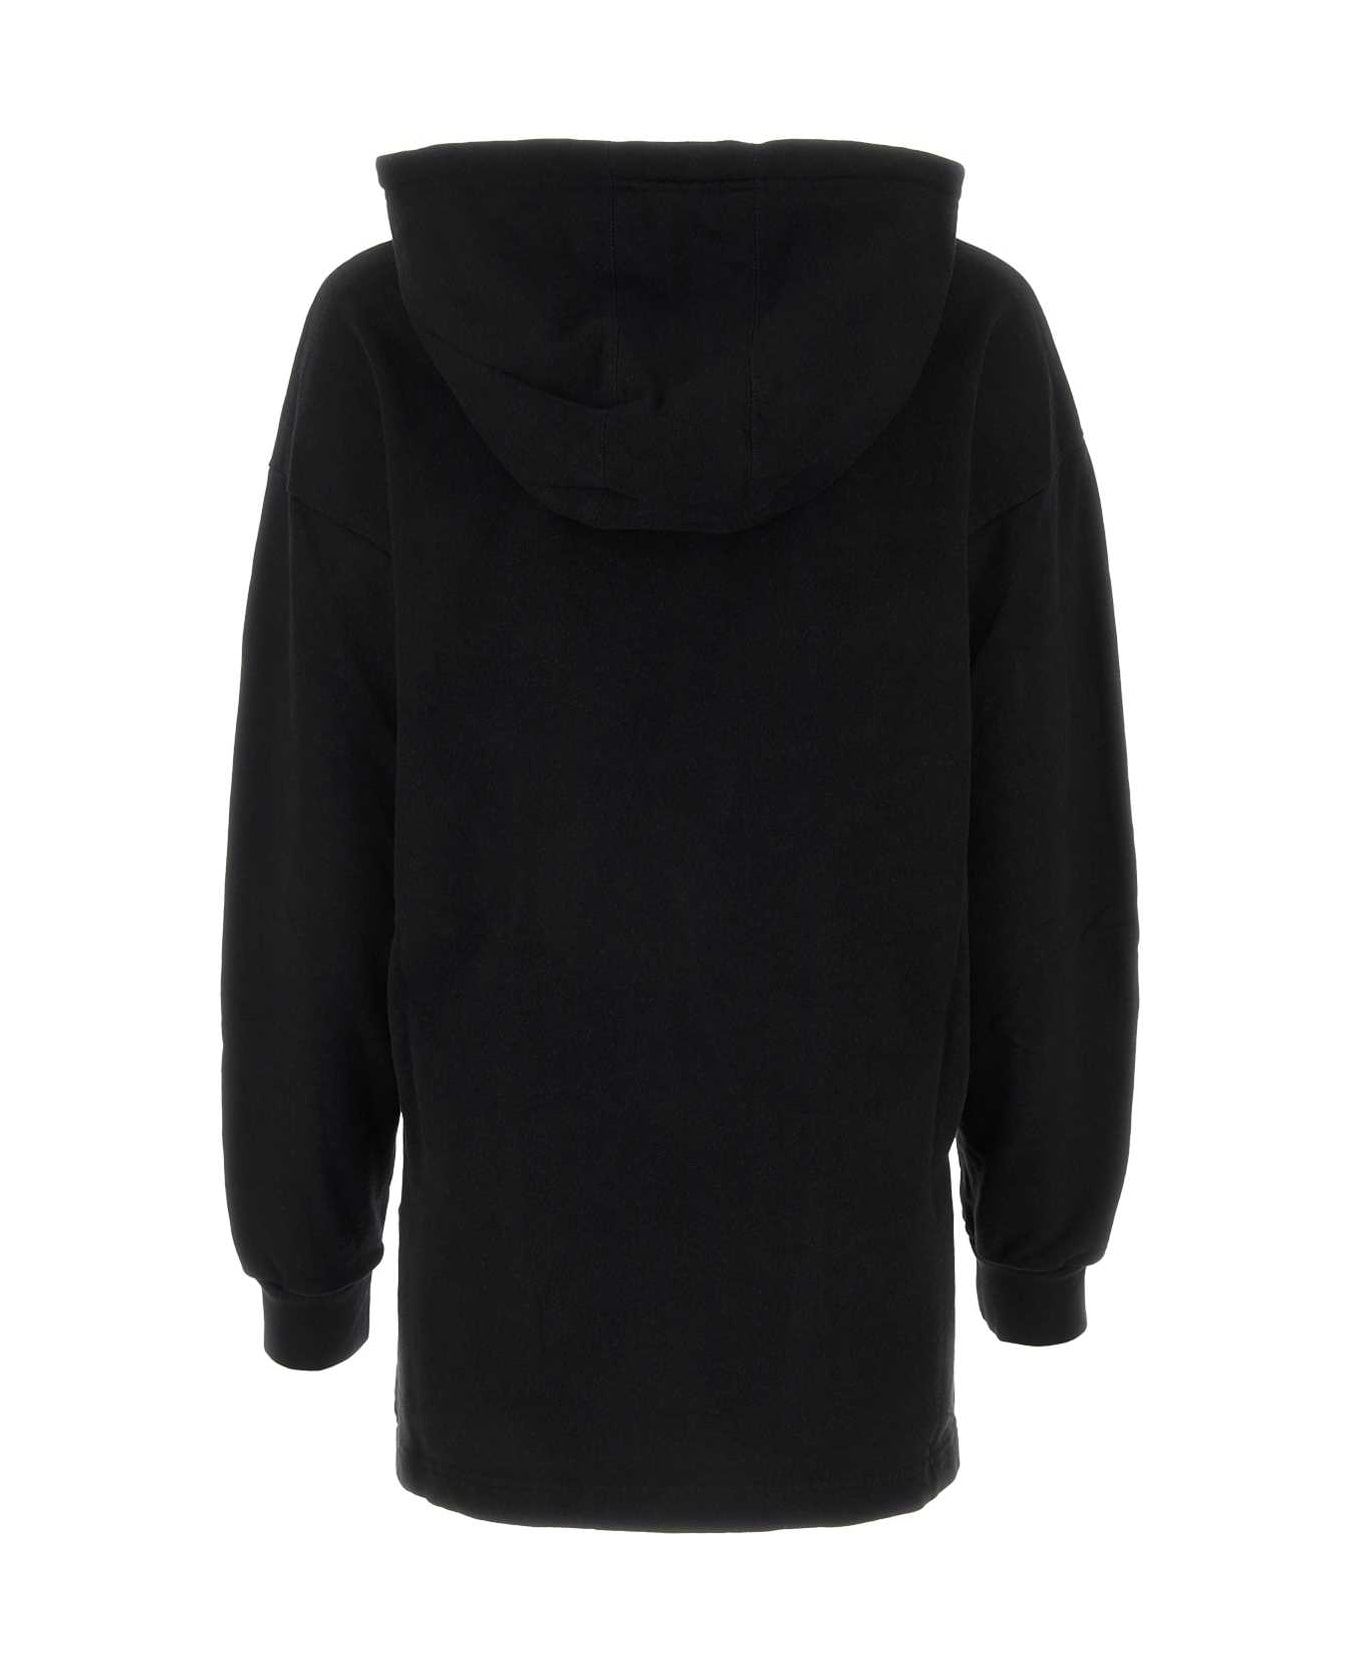 Marant Étoile Marly Sweatshirt - Black